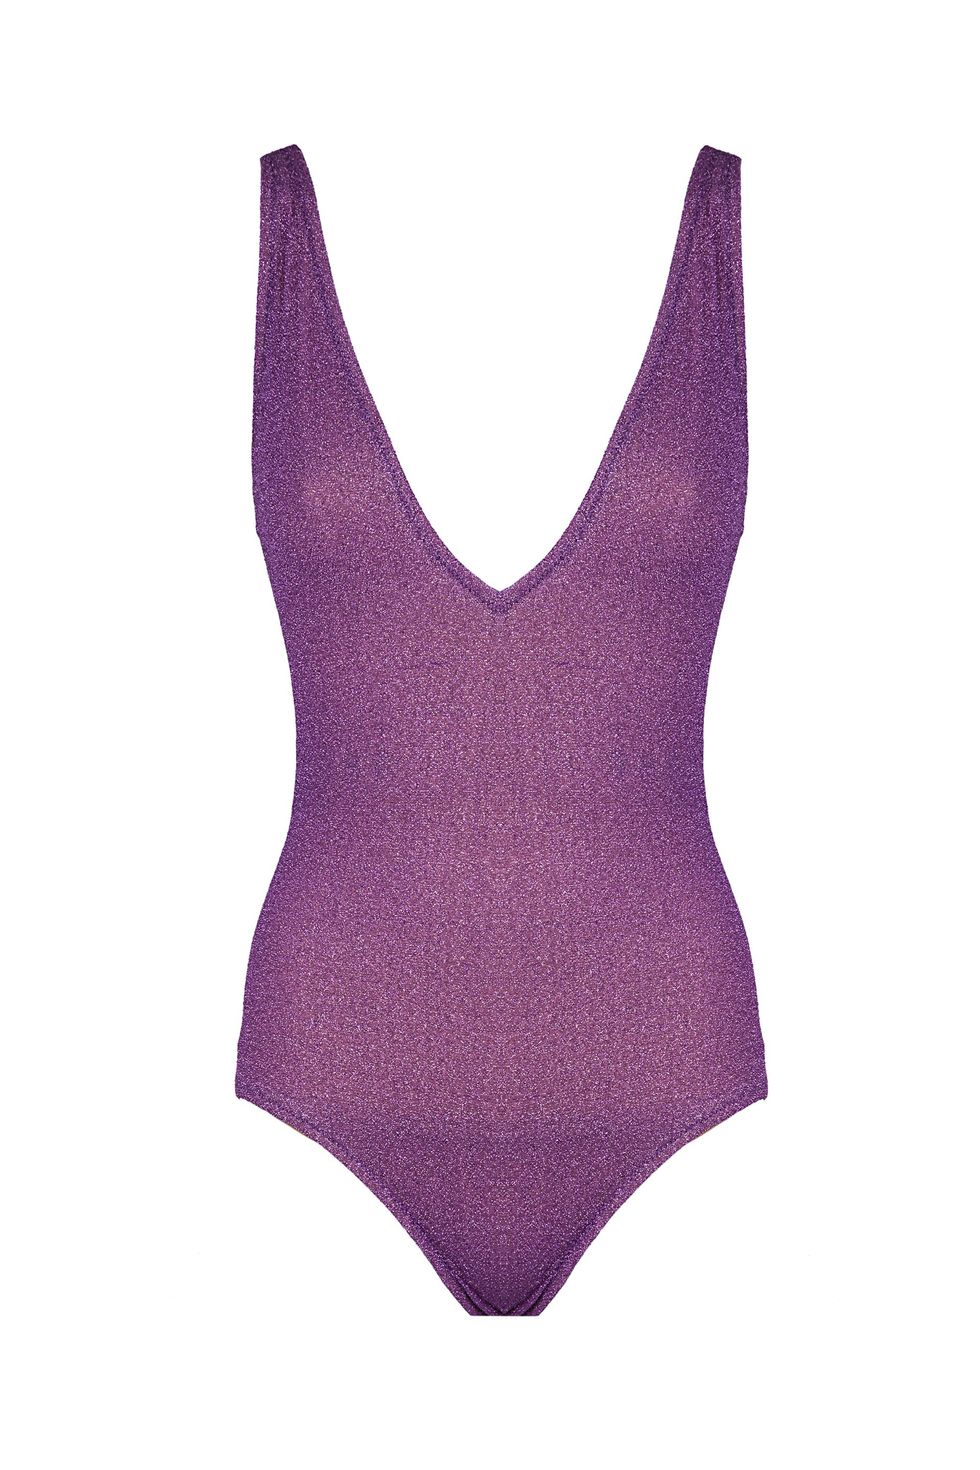 Clothing, Leotard, One-piece swimsuit, Swimwear, Violet, Purple, Undergarment, Maillot, Lingerie, Monokini, 